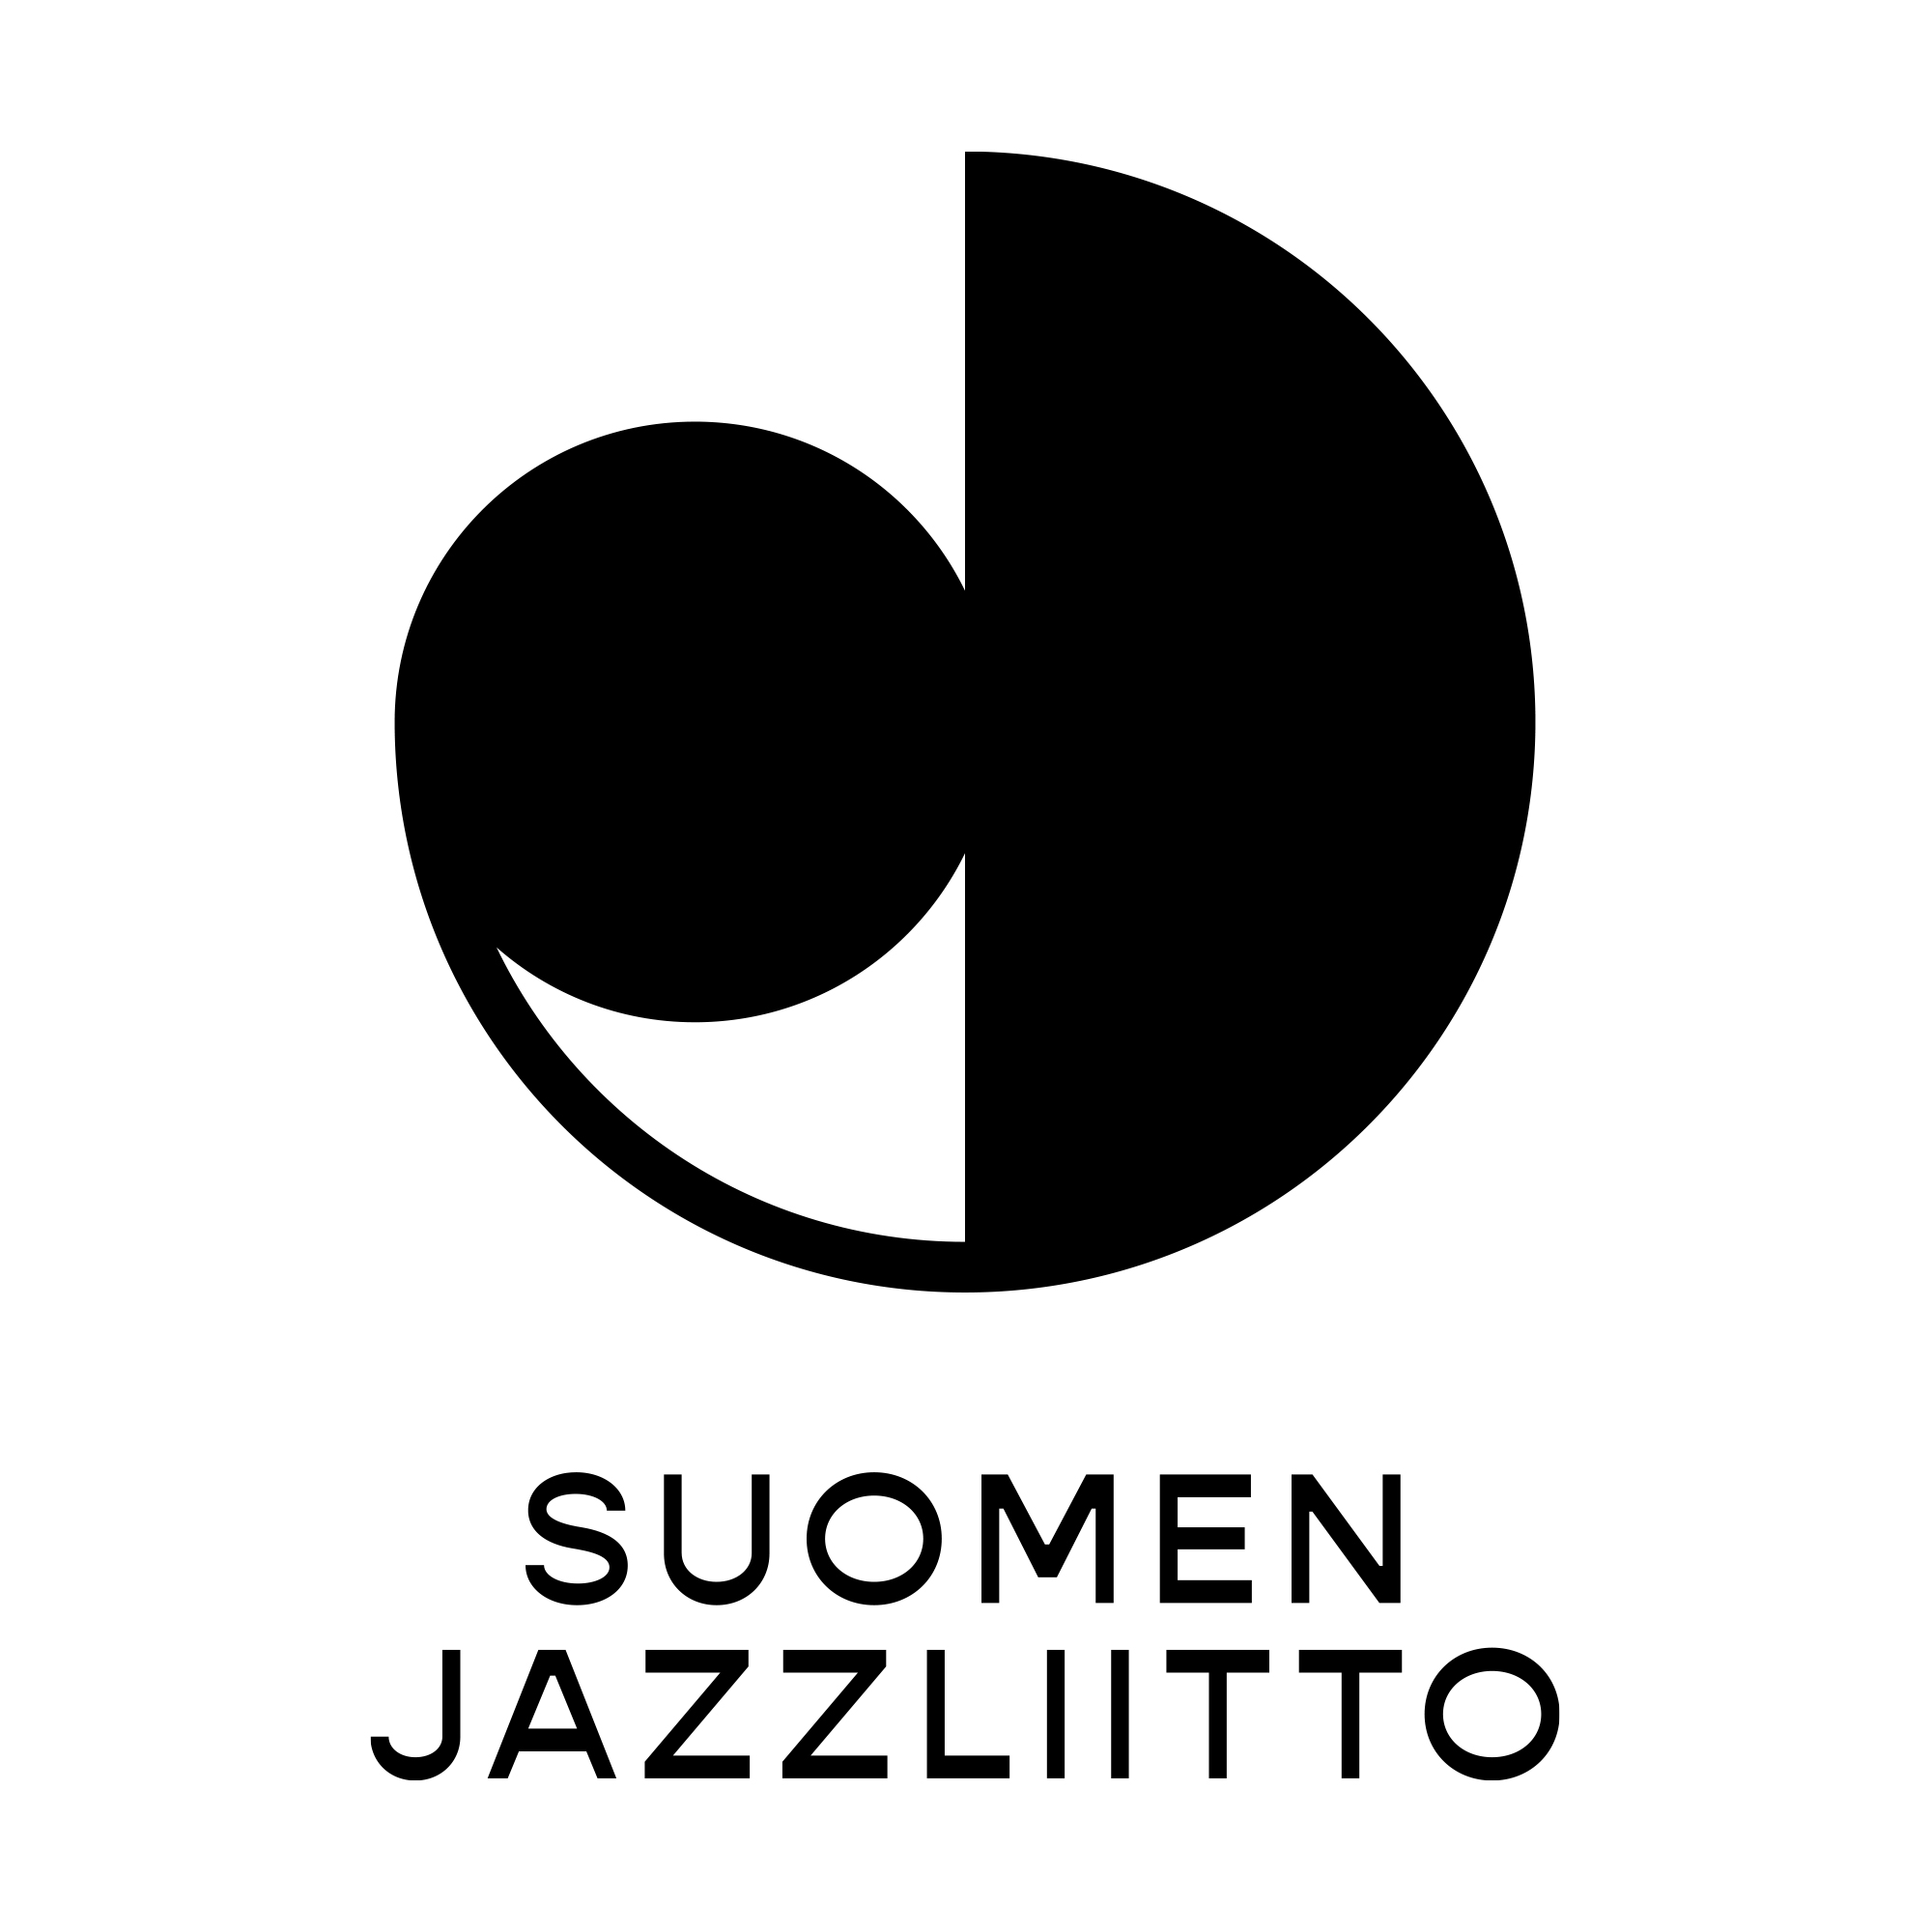 Suomen Jazzliitto - Logo design by Tero Ahonen, Helsinki